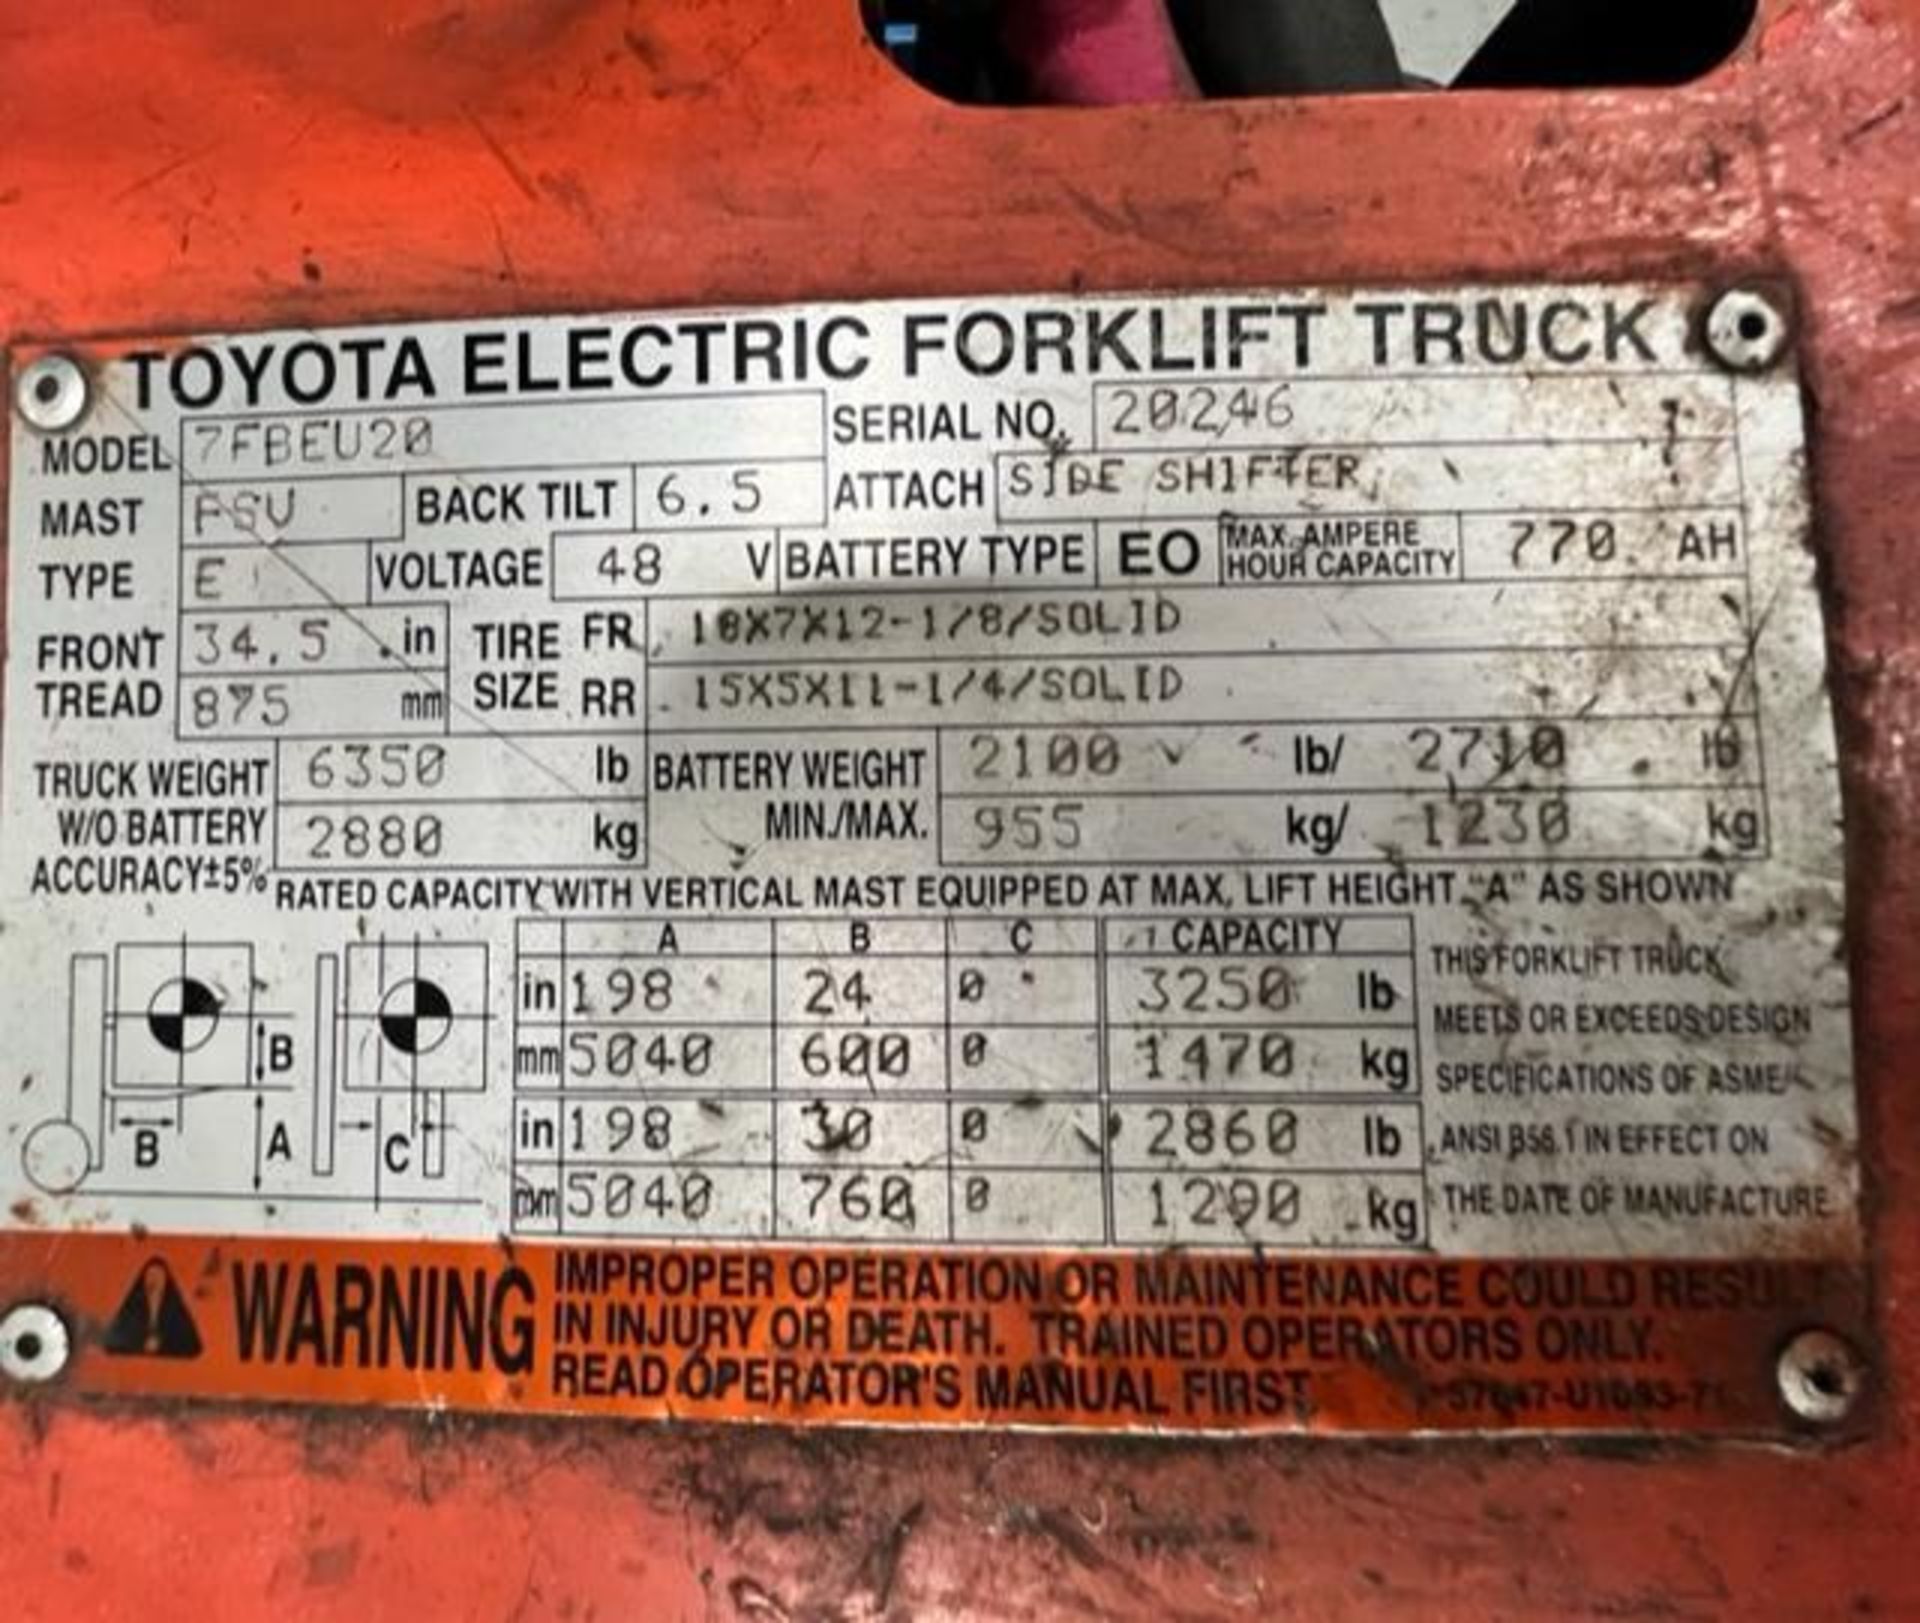 Toyota 3,000 LB. Electric Forklift, 3-Stage Mast, Solid Tires, Sideshift, Model 7FBEU20, S/N 20246, - Image 5 of 8